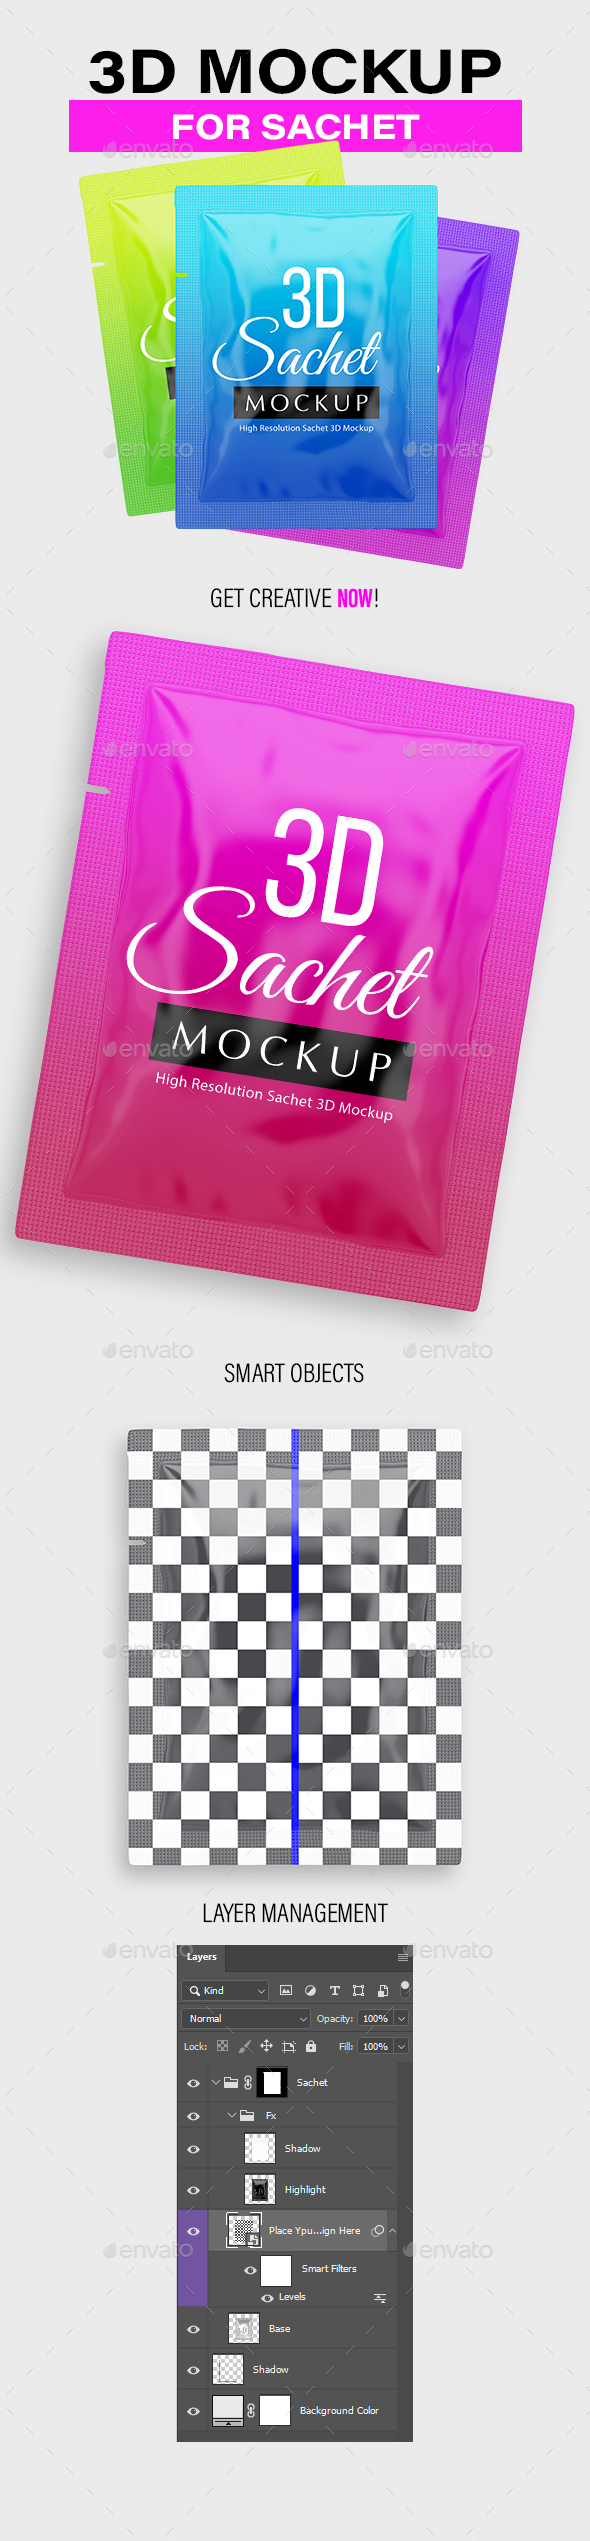 Download 3D Sachet Mockup High Resolution Photoshop Smart Object by mosumart